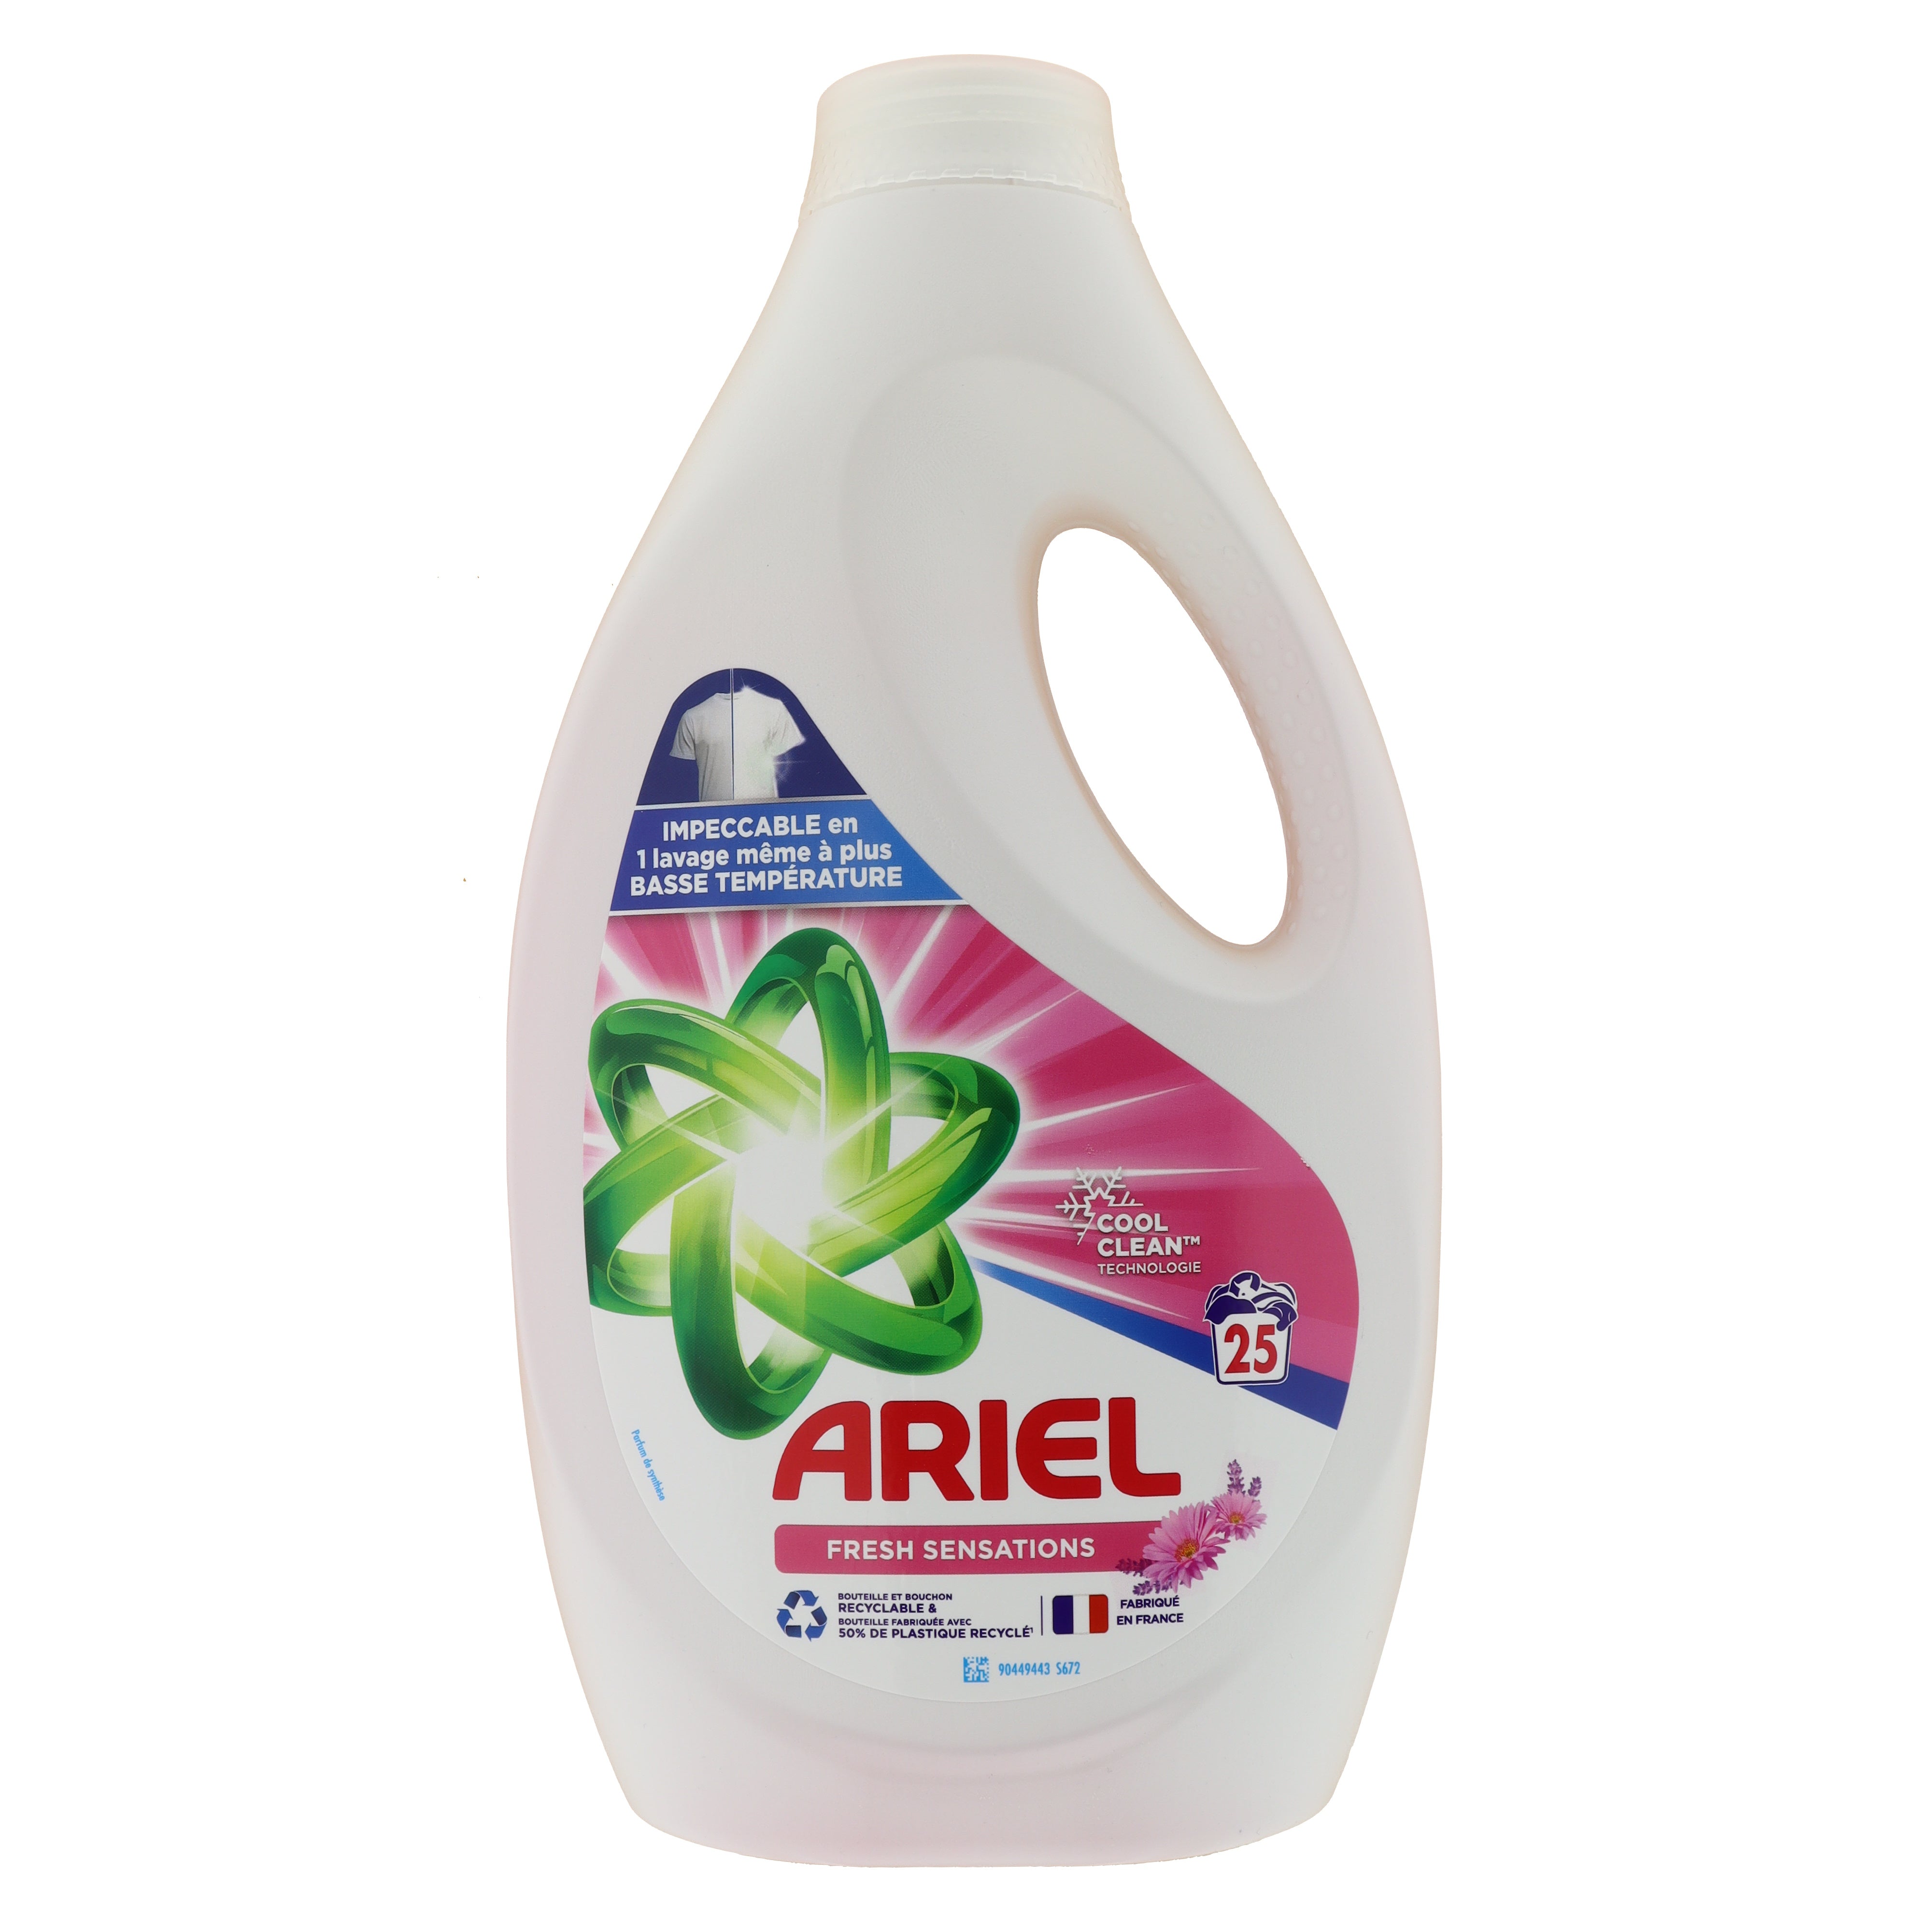 Ariel Fresh Sensation vloeibaar wasmiddel 1,25L 2pack 50 wasbeurten